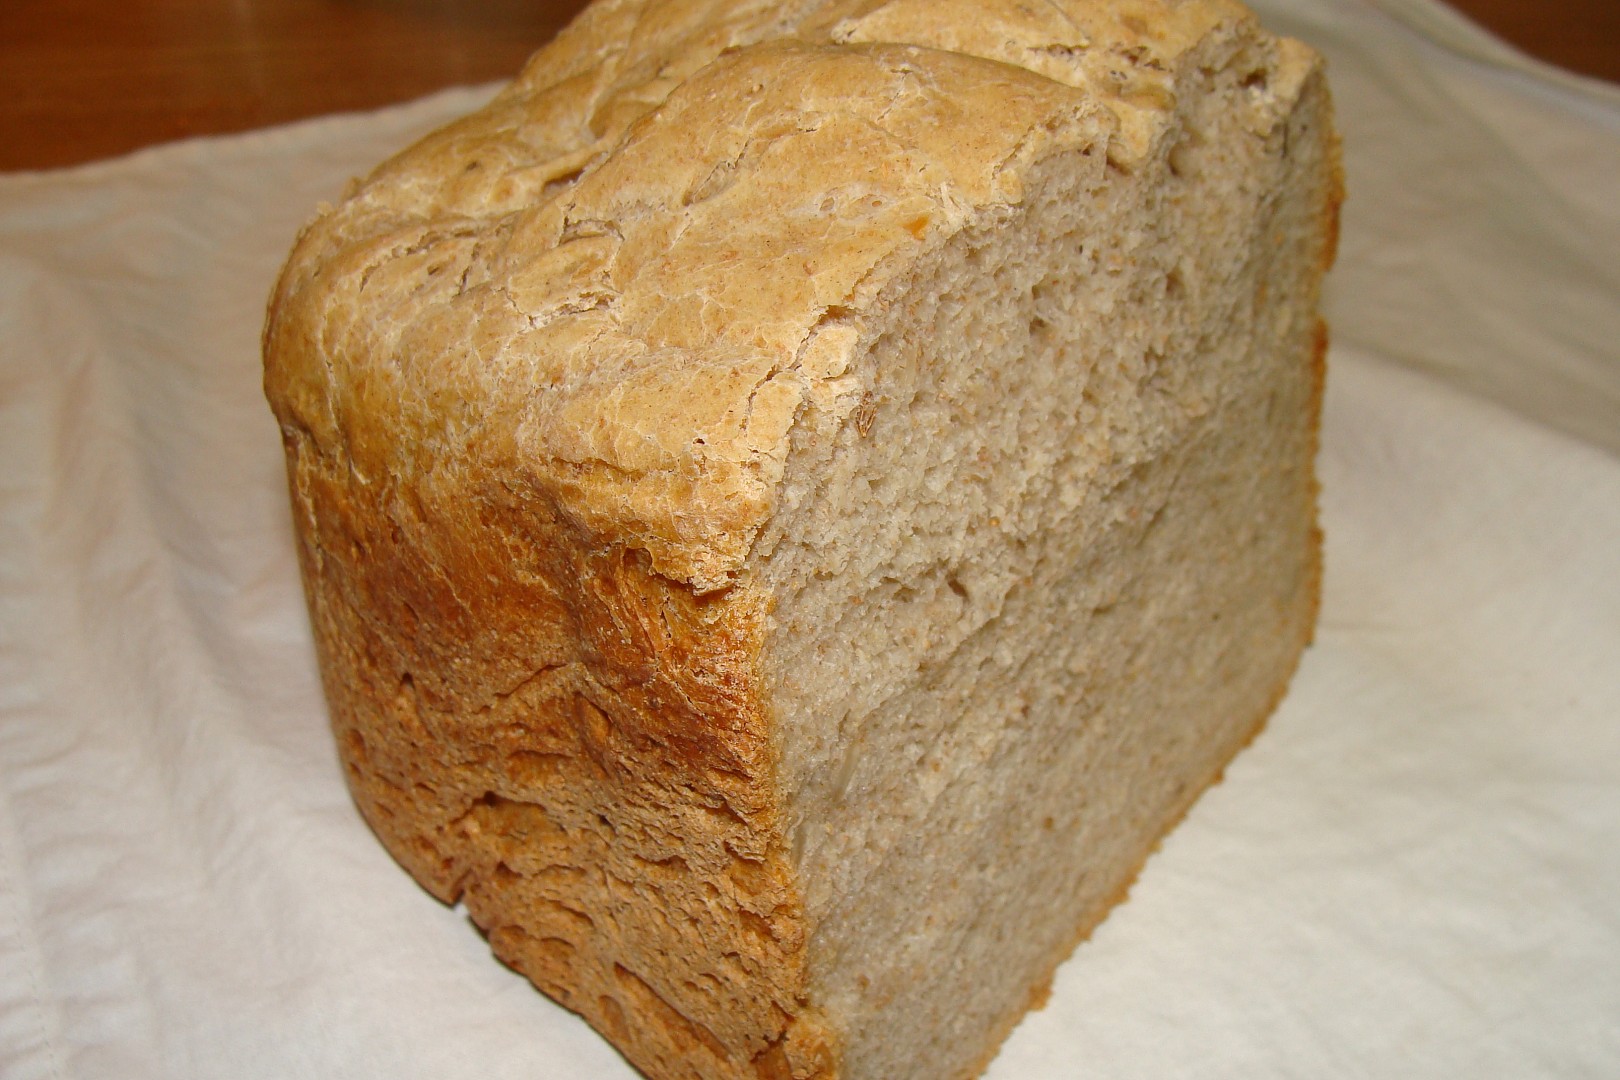 Oblíbený chléb